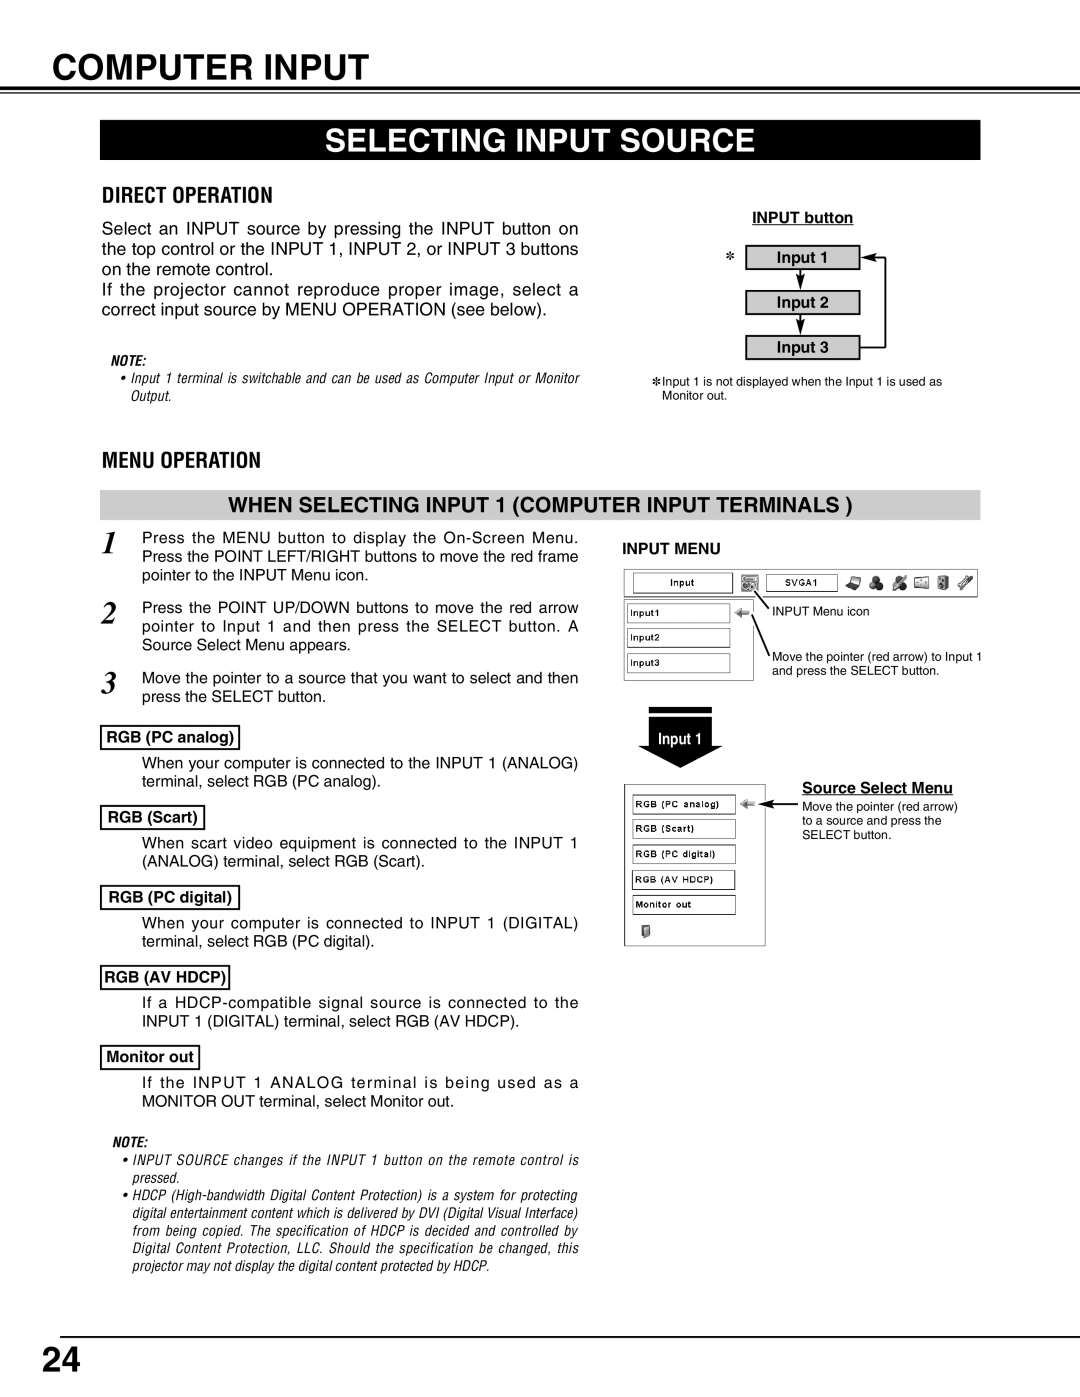 Eiki LC-X71L owner manual Computer Input, Selecting Input Source 